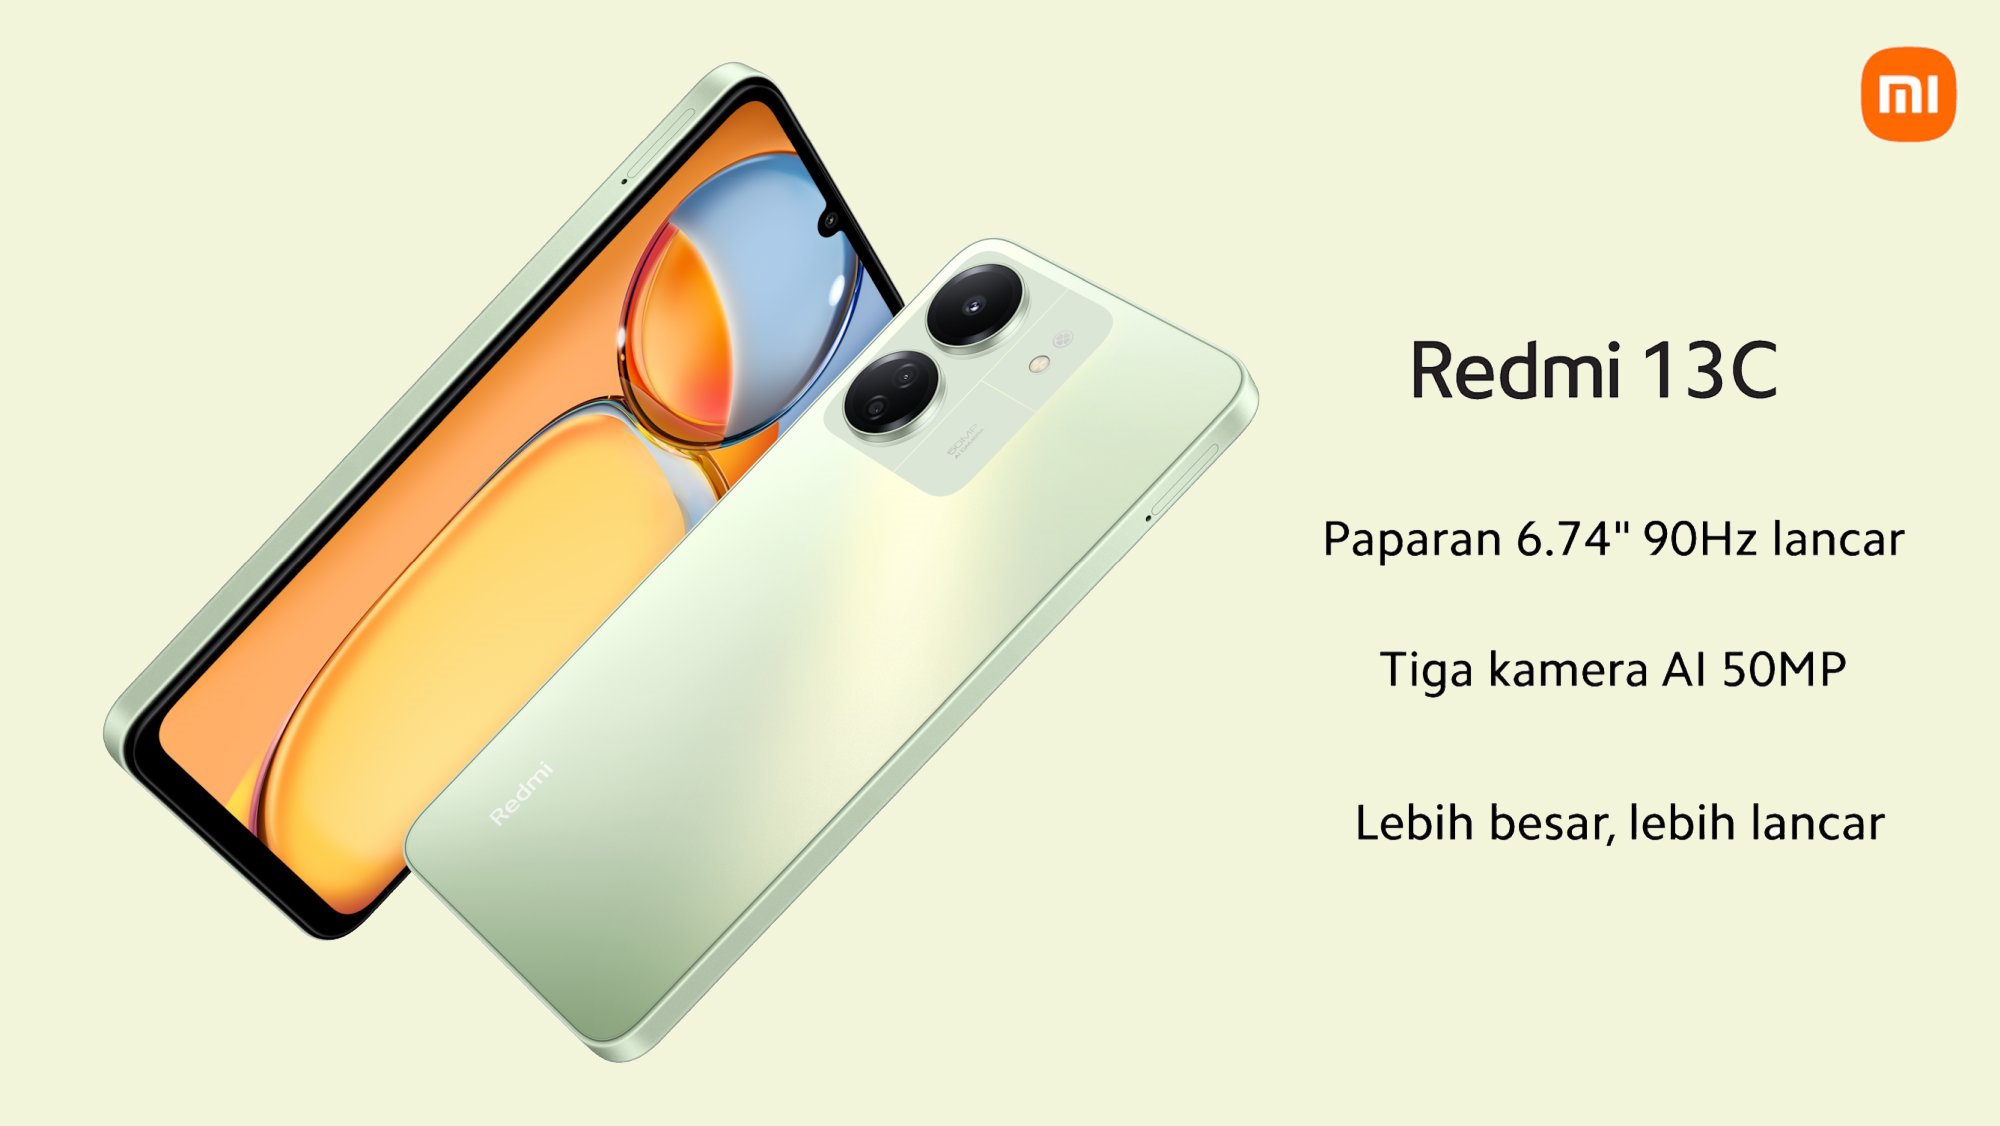 Xiaomi Redmi 13C 4G Price In Malaysia & Specs - KTS